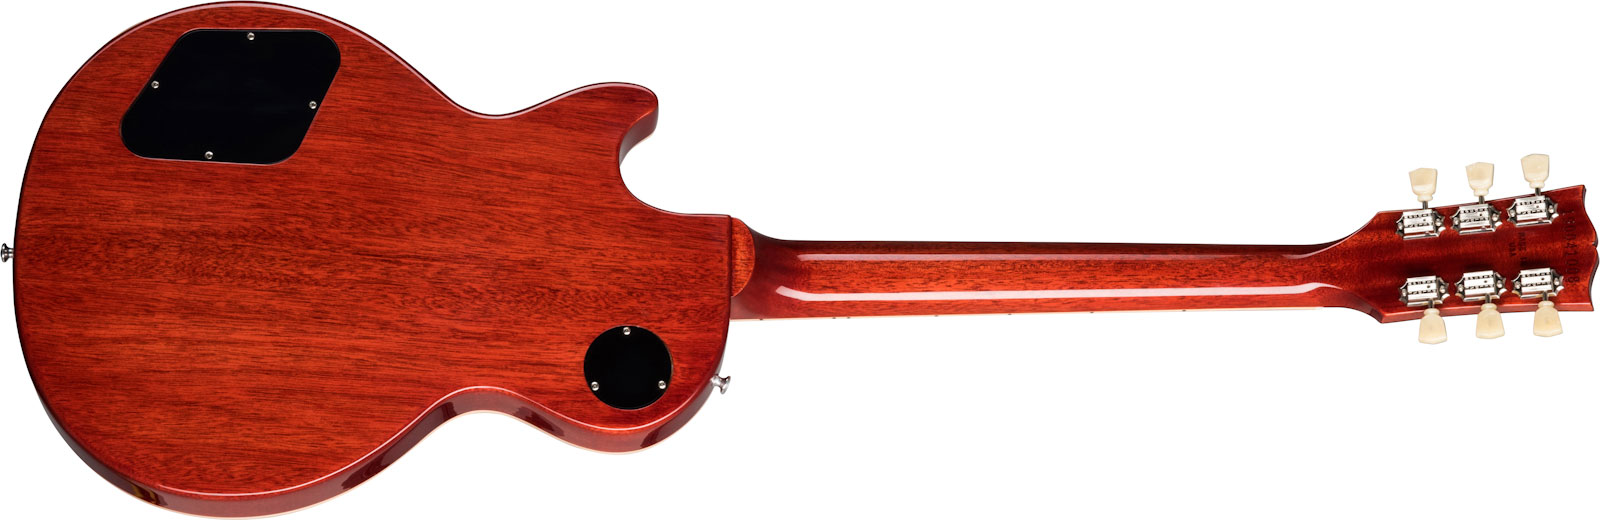 Gibson Les Paul Standard 50s 2h Ht Rw - Heritage Cherry Sunburst - Guitarra eléctrica de corte único. - Variation 1